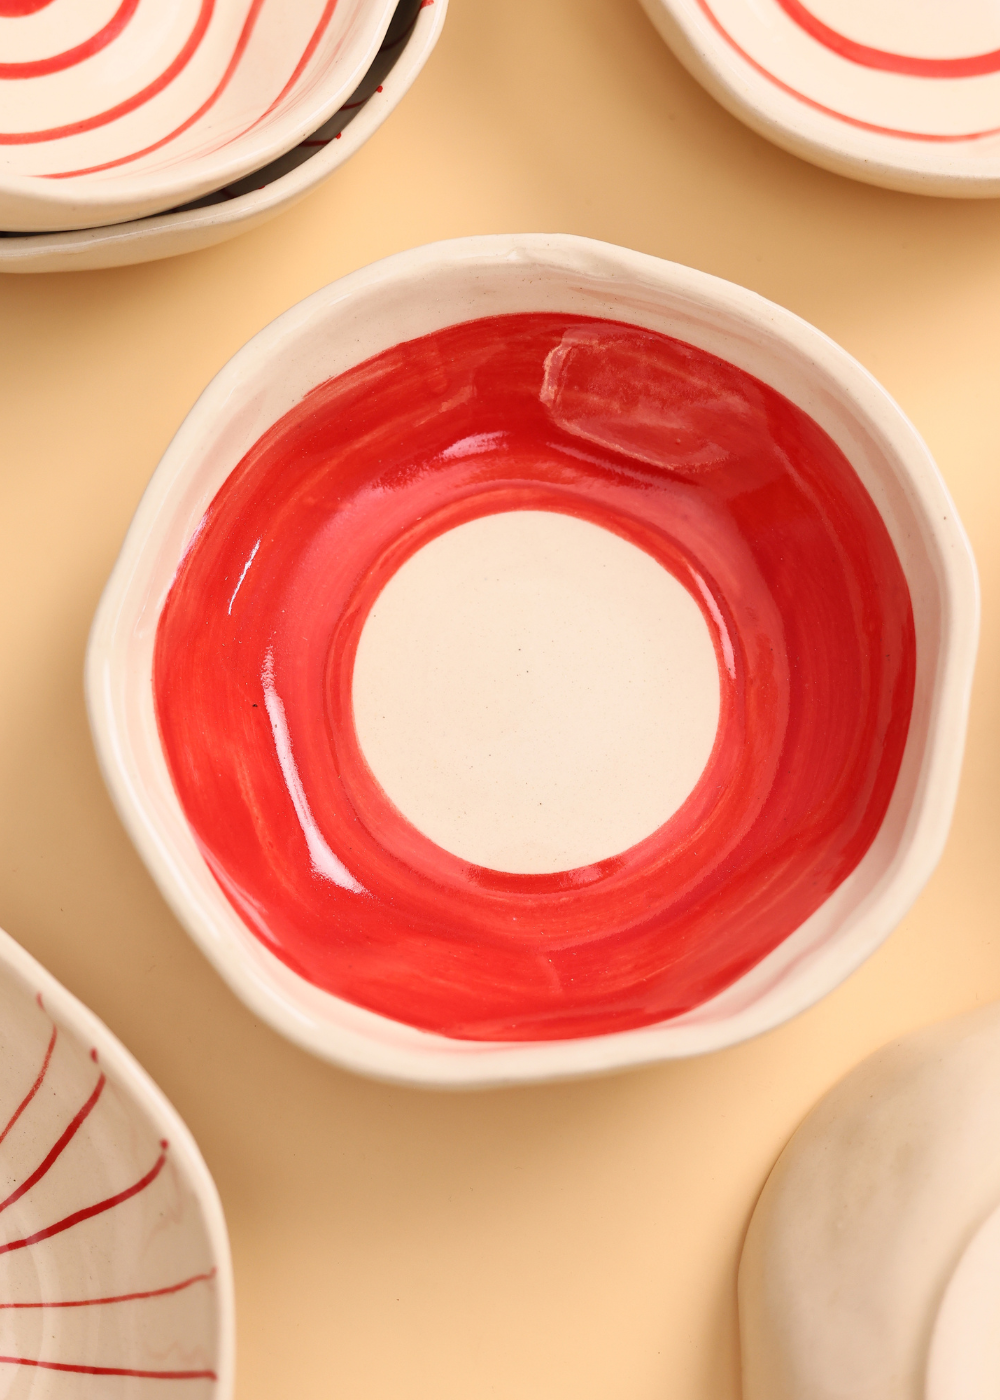 handmade red & white bowl made by ceramic 